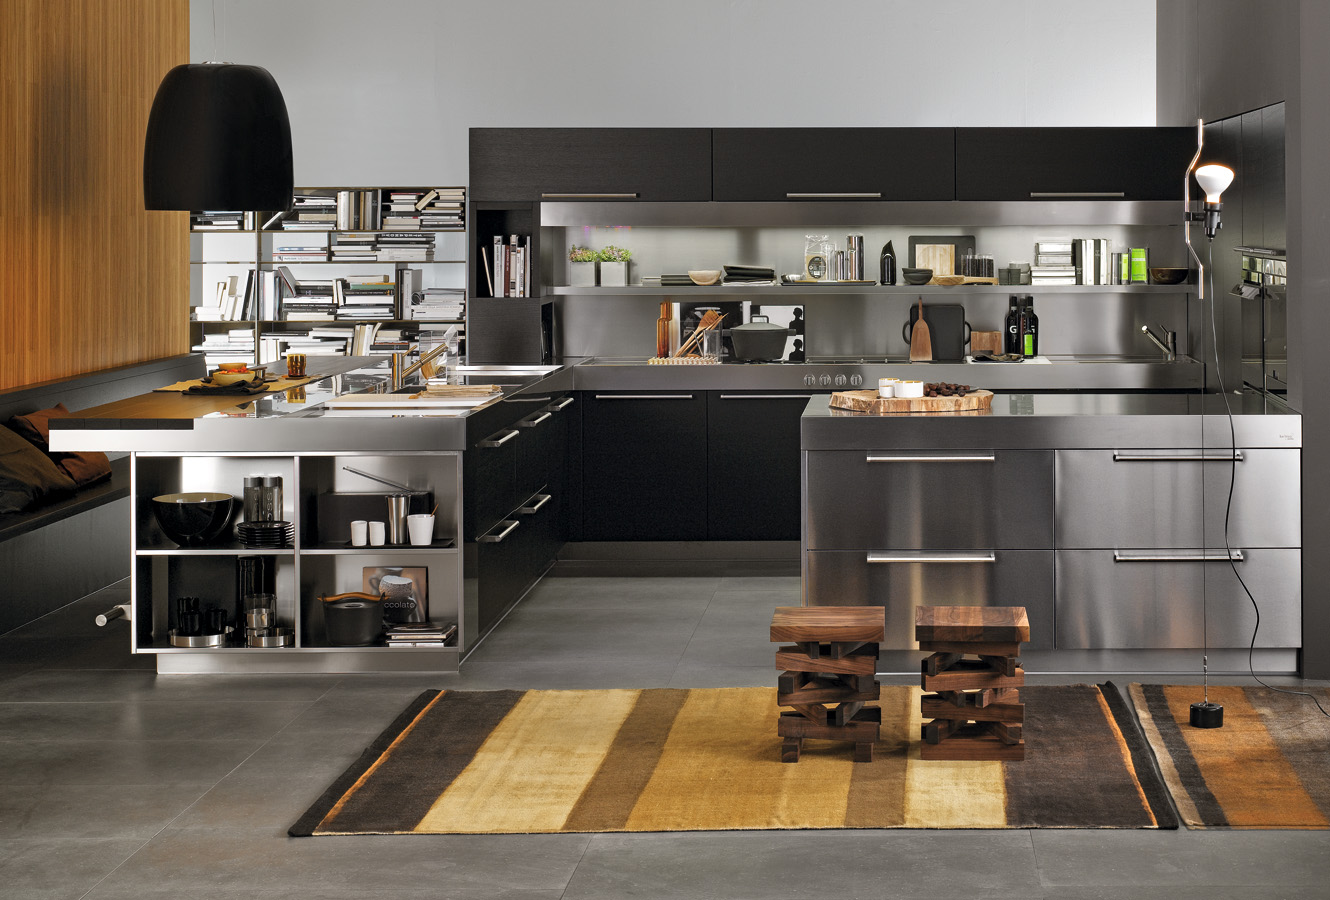 simple kitchen interior design ideas